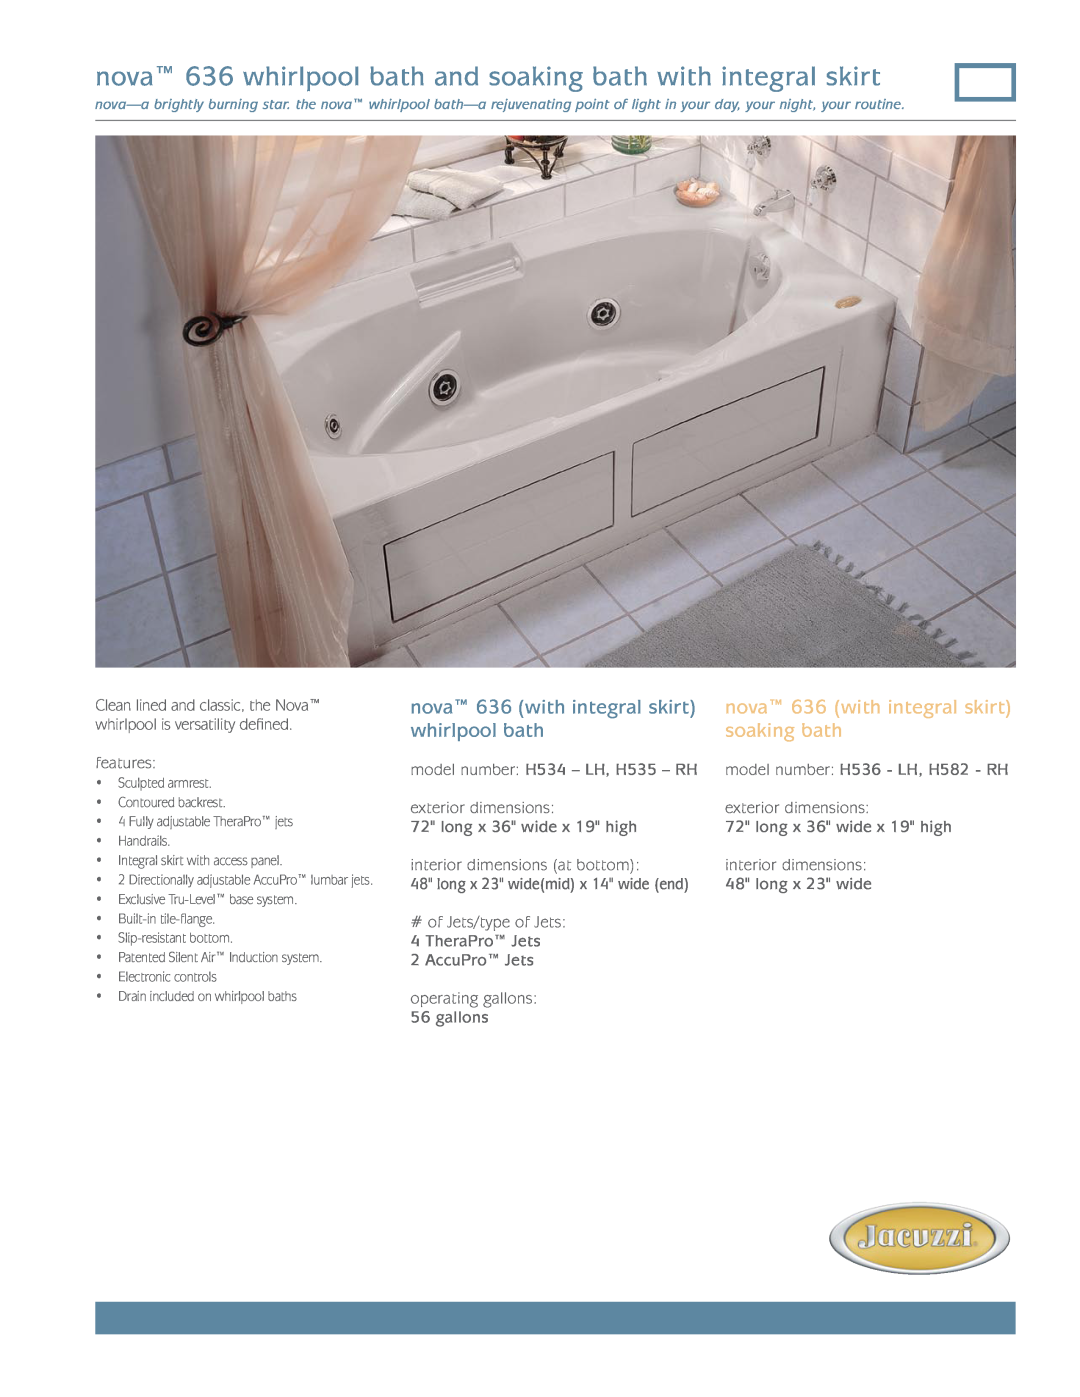 Jacuzzi dimensions nova 636 with integral skirt, whirlpool bath, soaking bath 